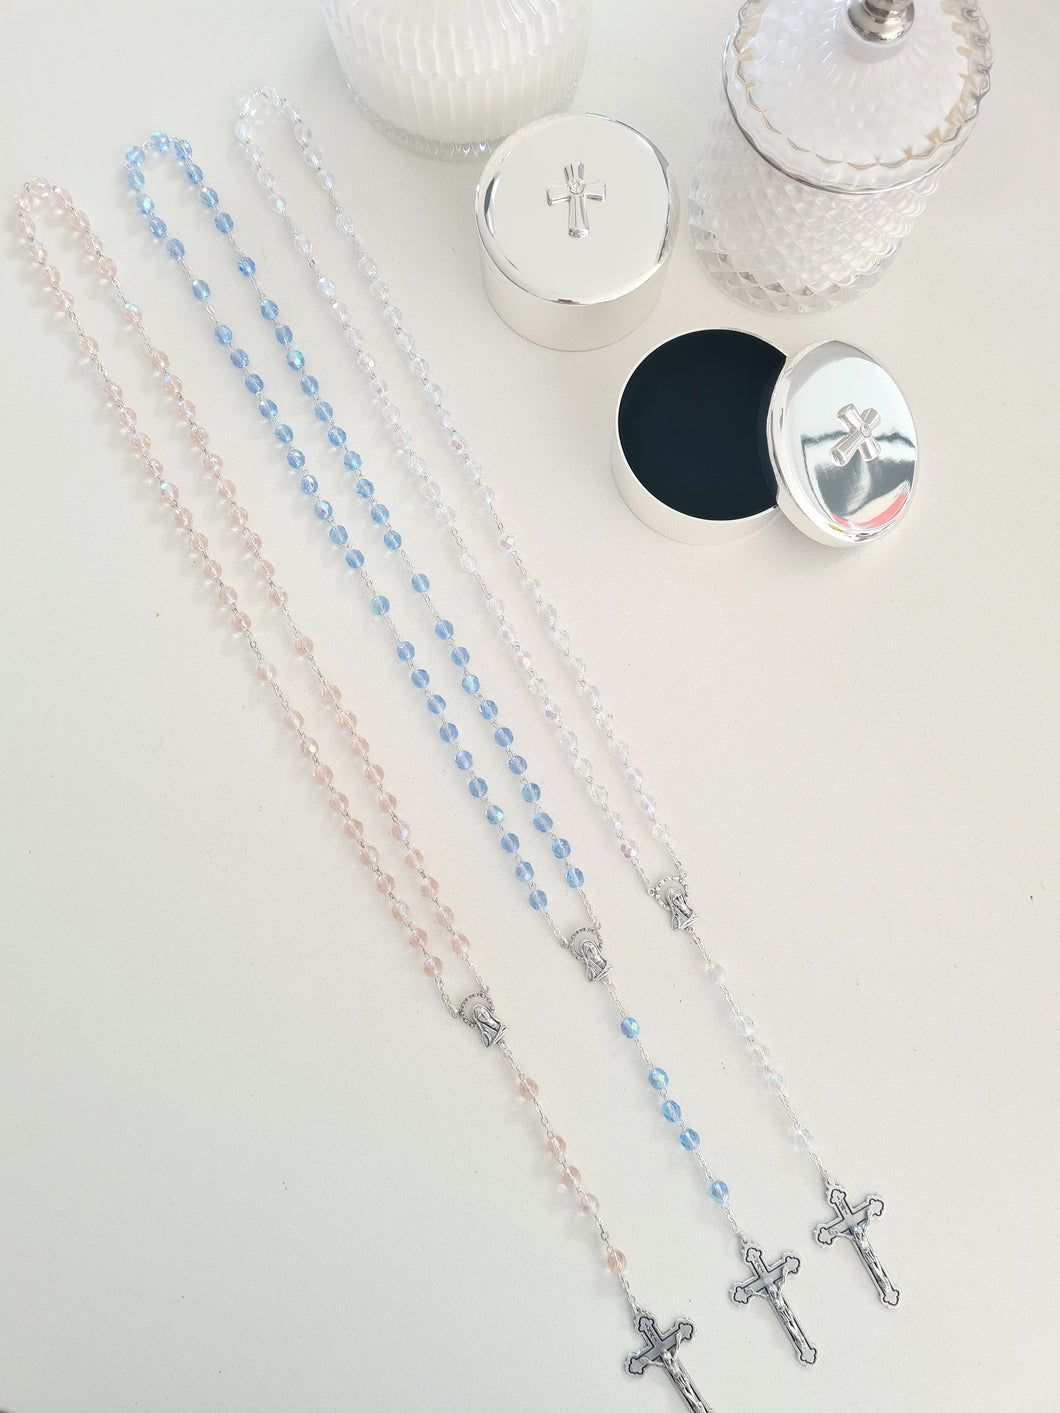 Crystal Rosary Beads